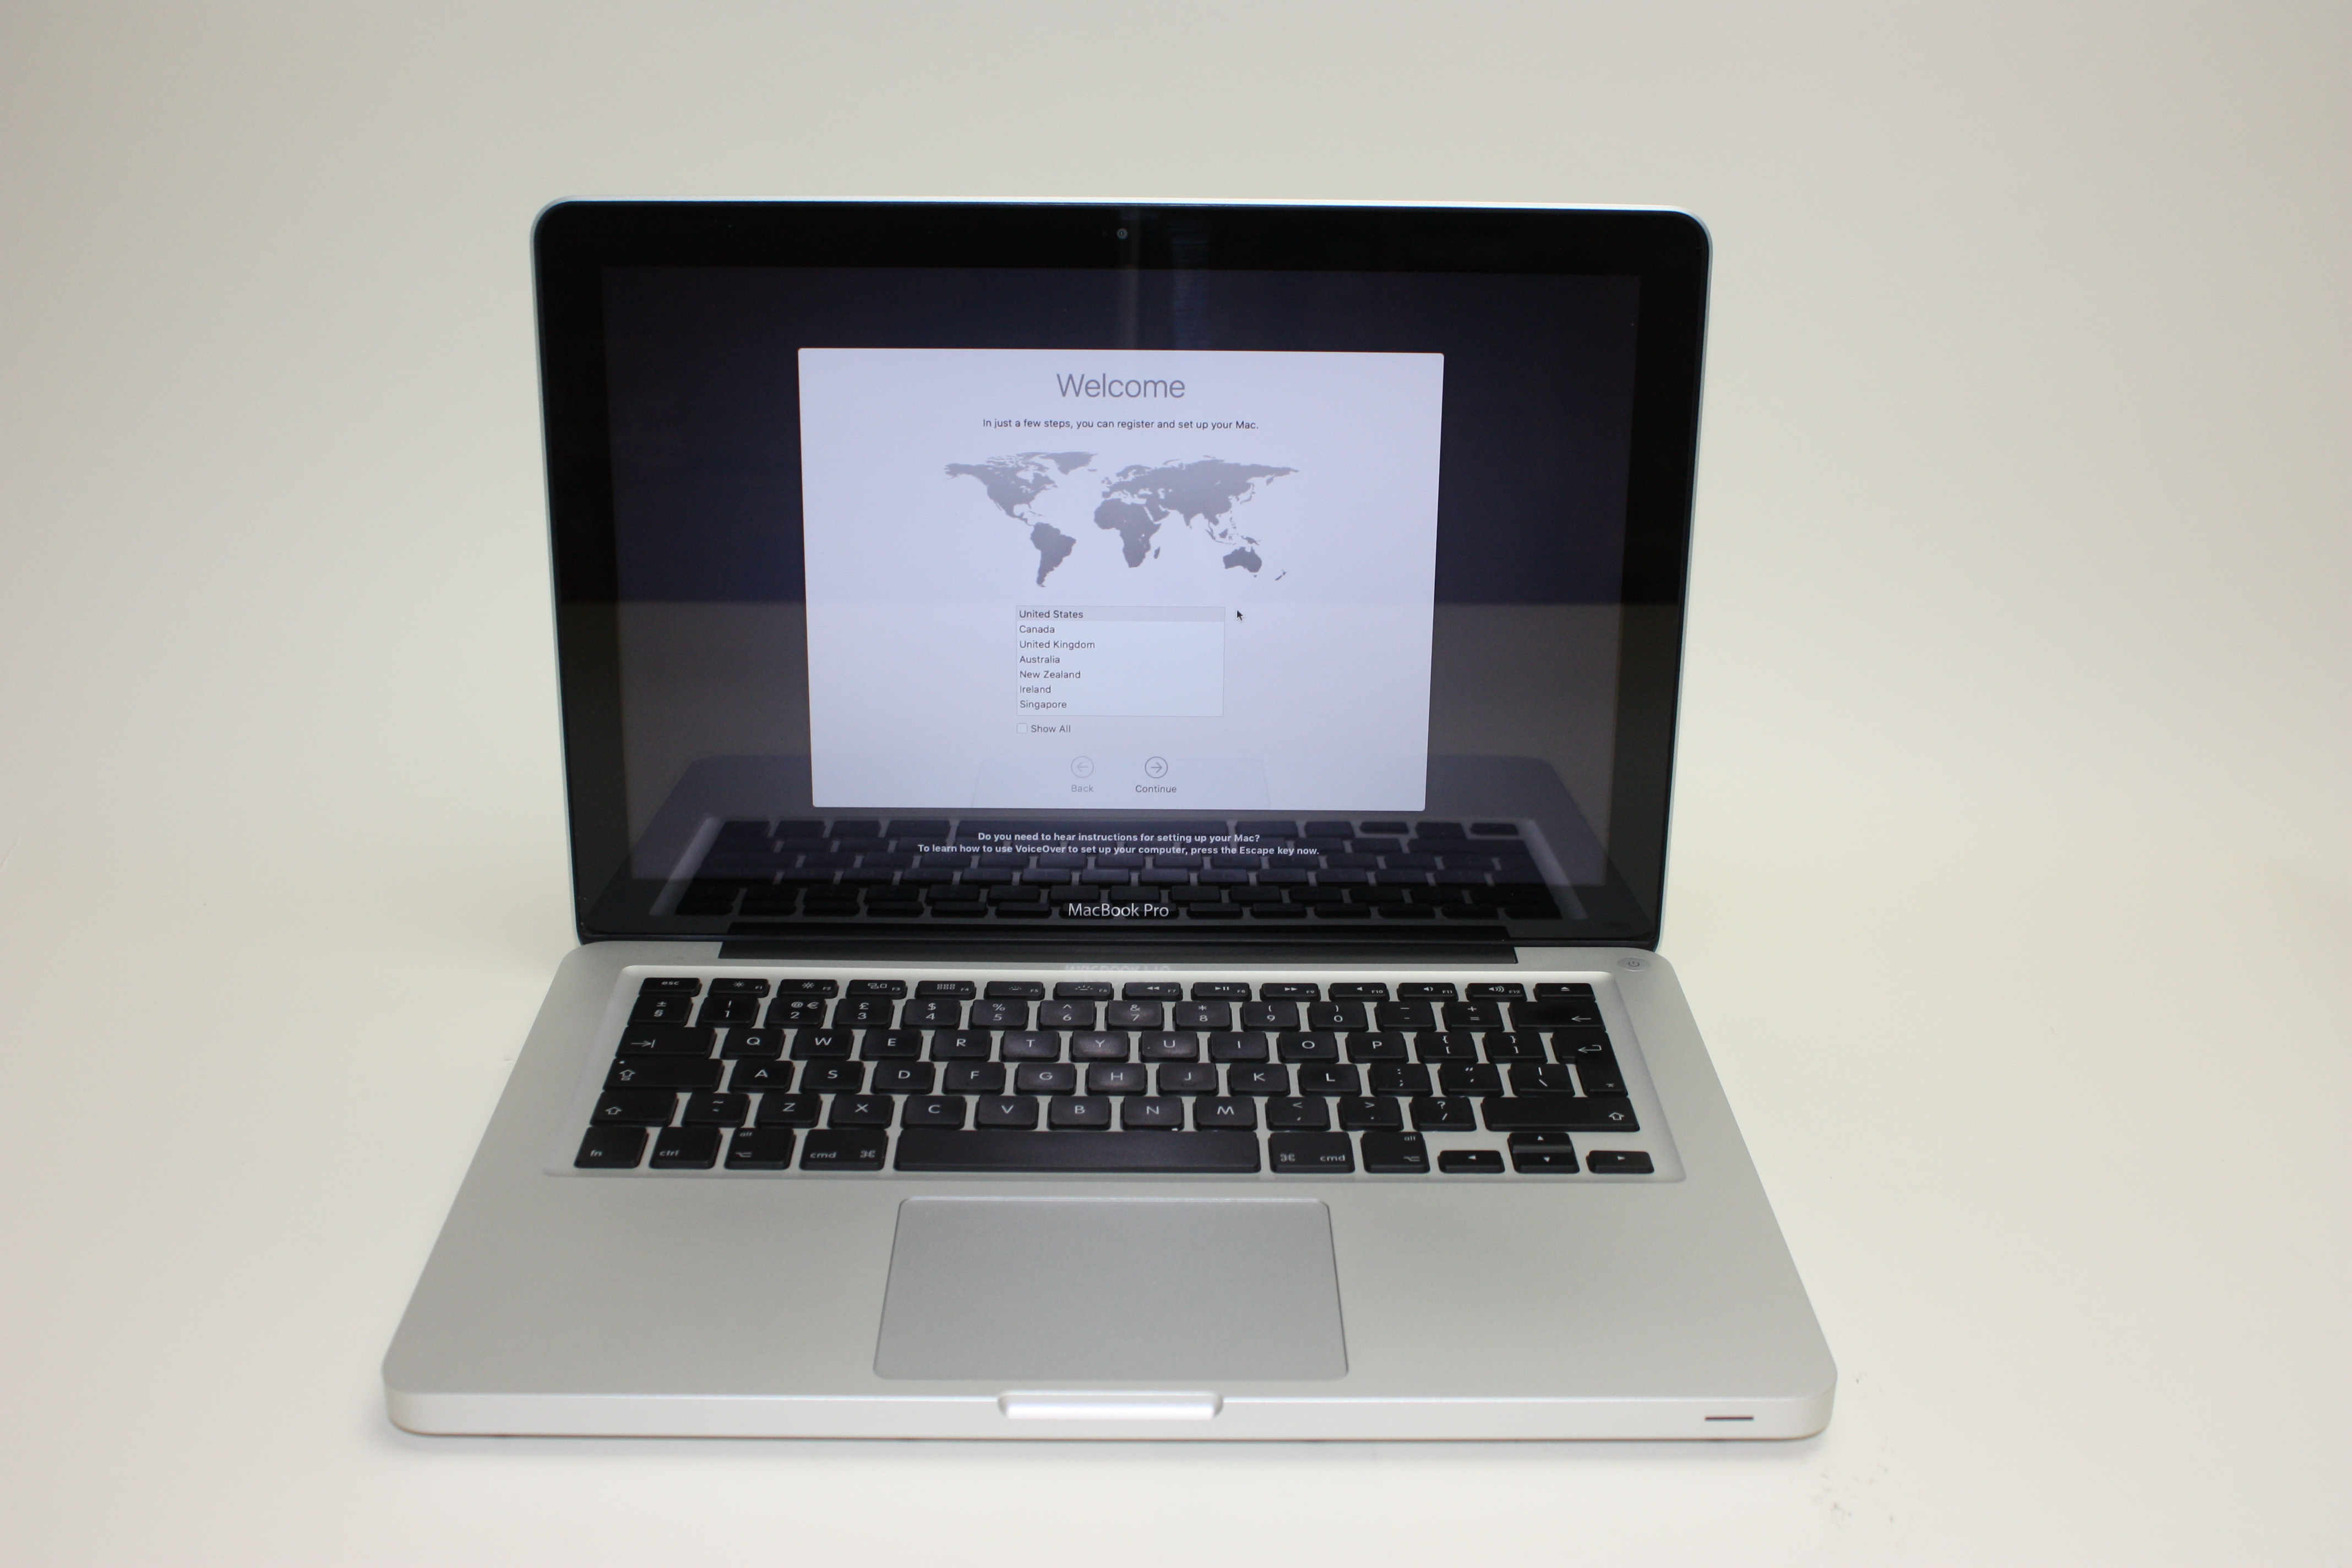 Refurbished MacBook Pro 13" 2.5 GHz Core i5 (I5-3210M) / 4 GB 1600 MHz